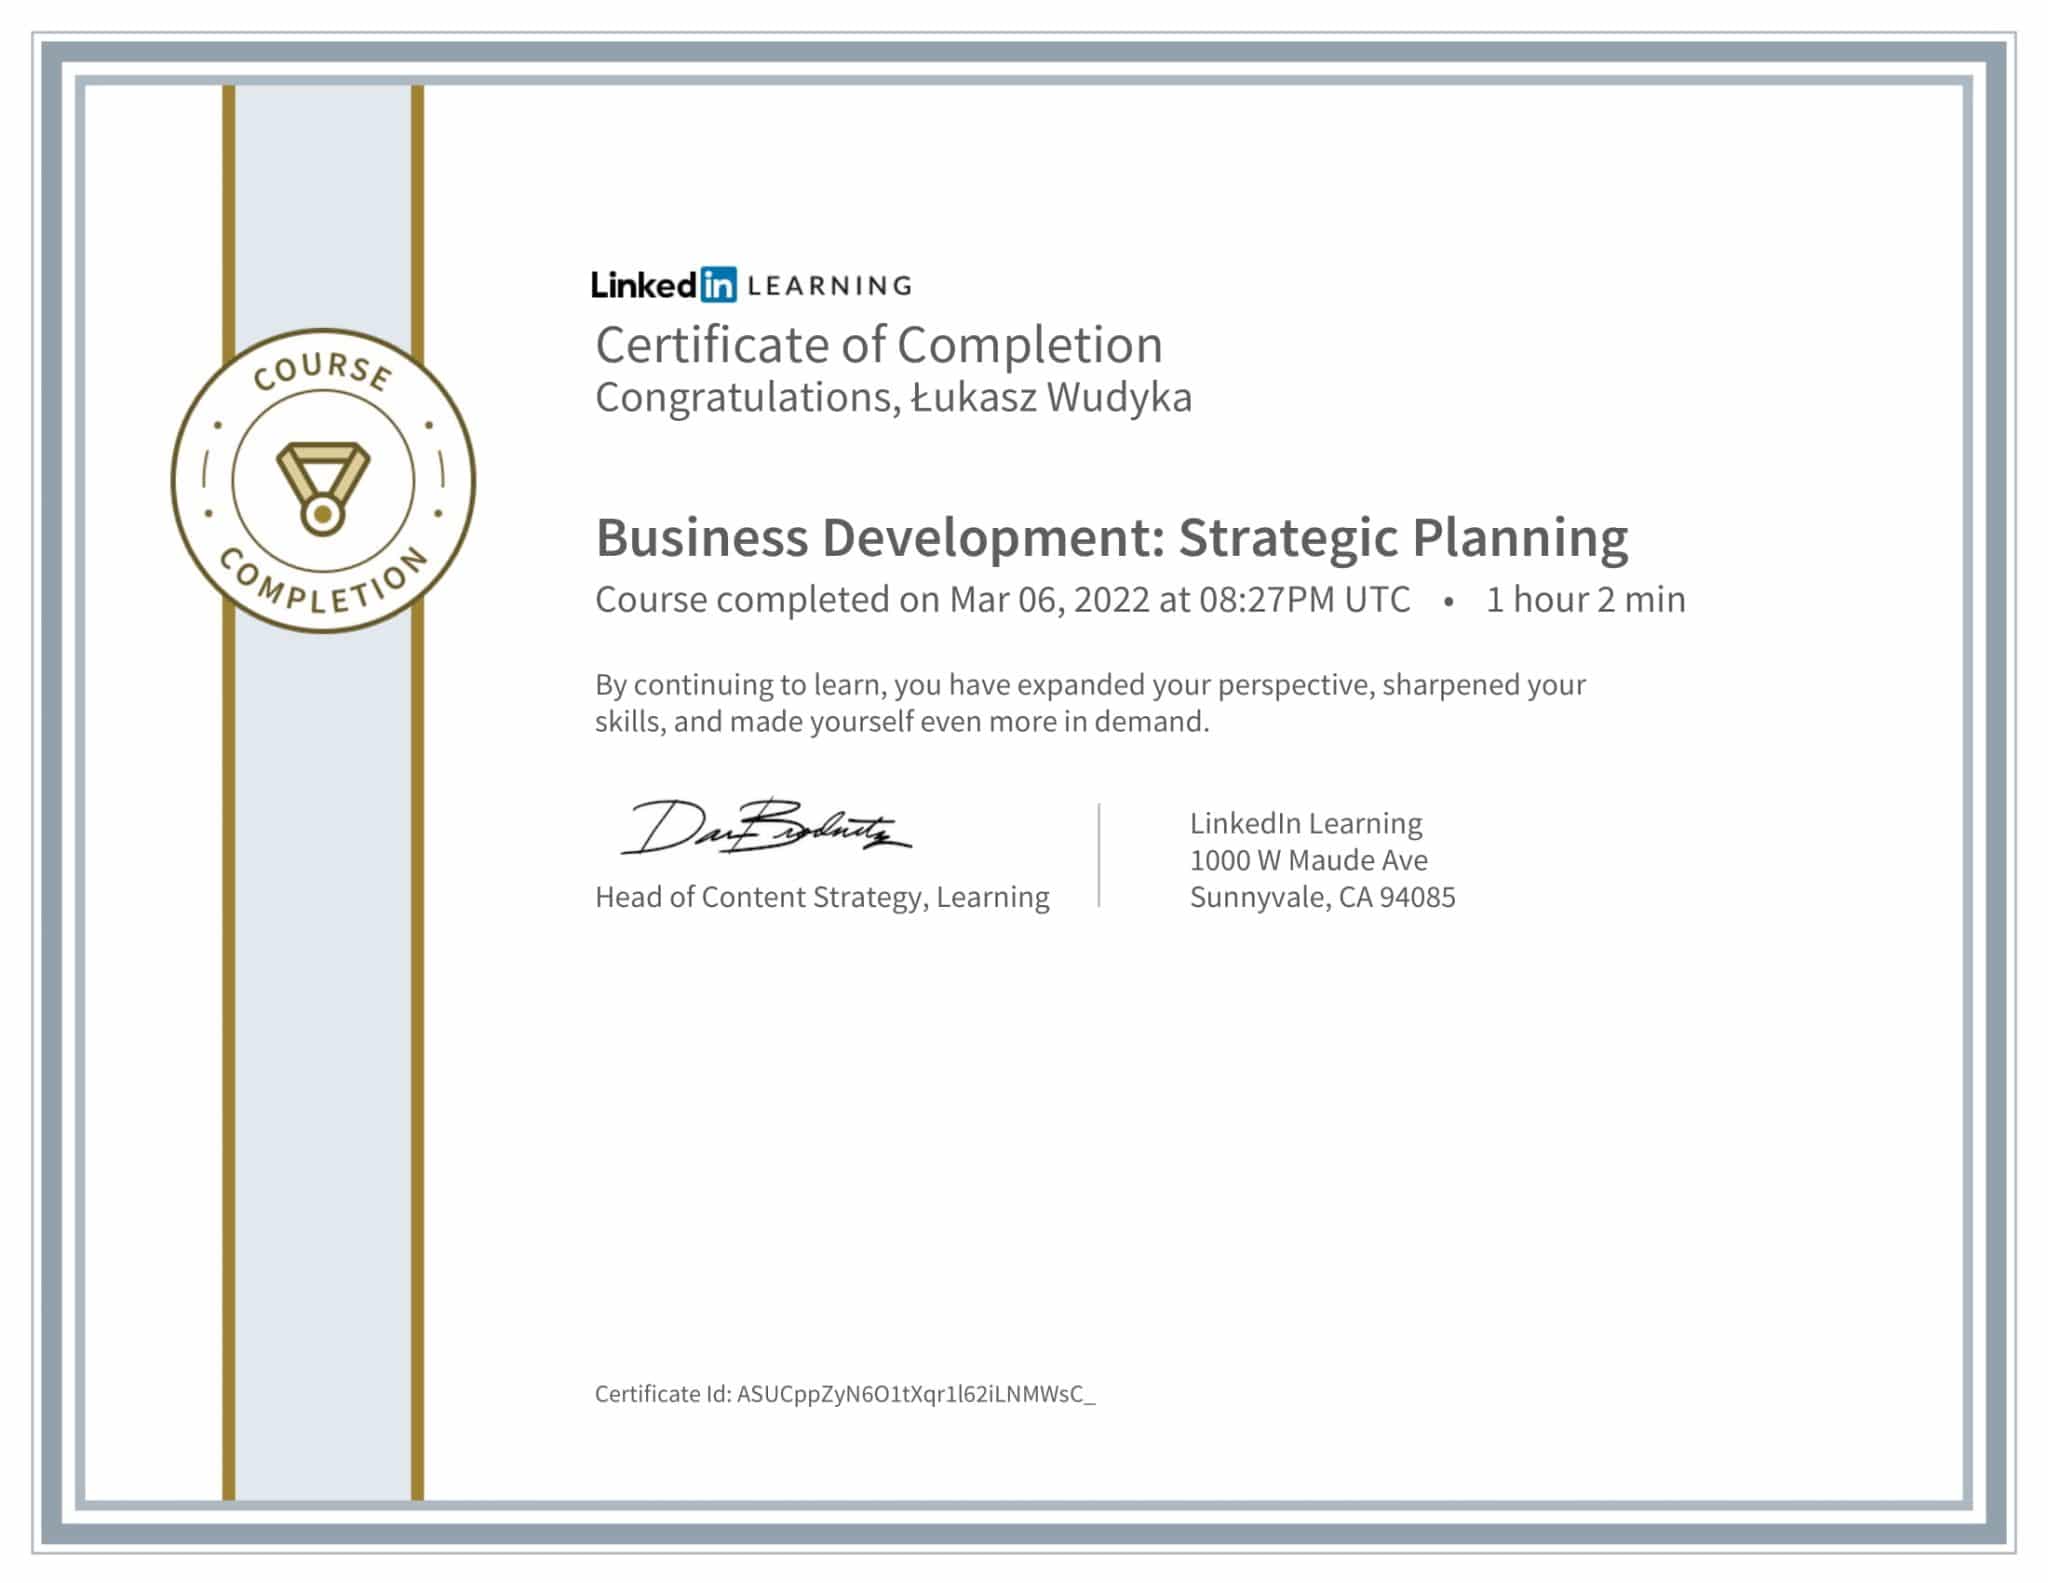 CertificateOfCompletion_Business Development Strategic Planning-1